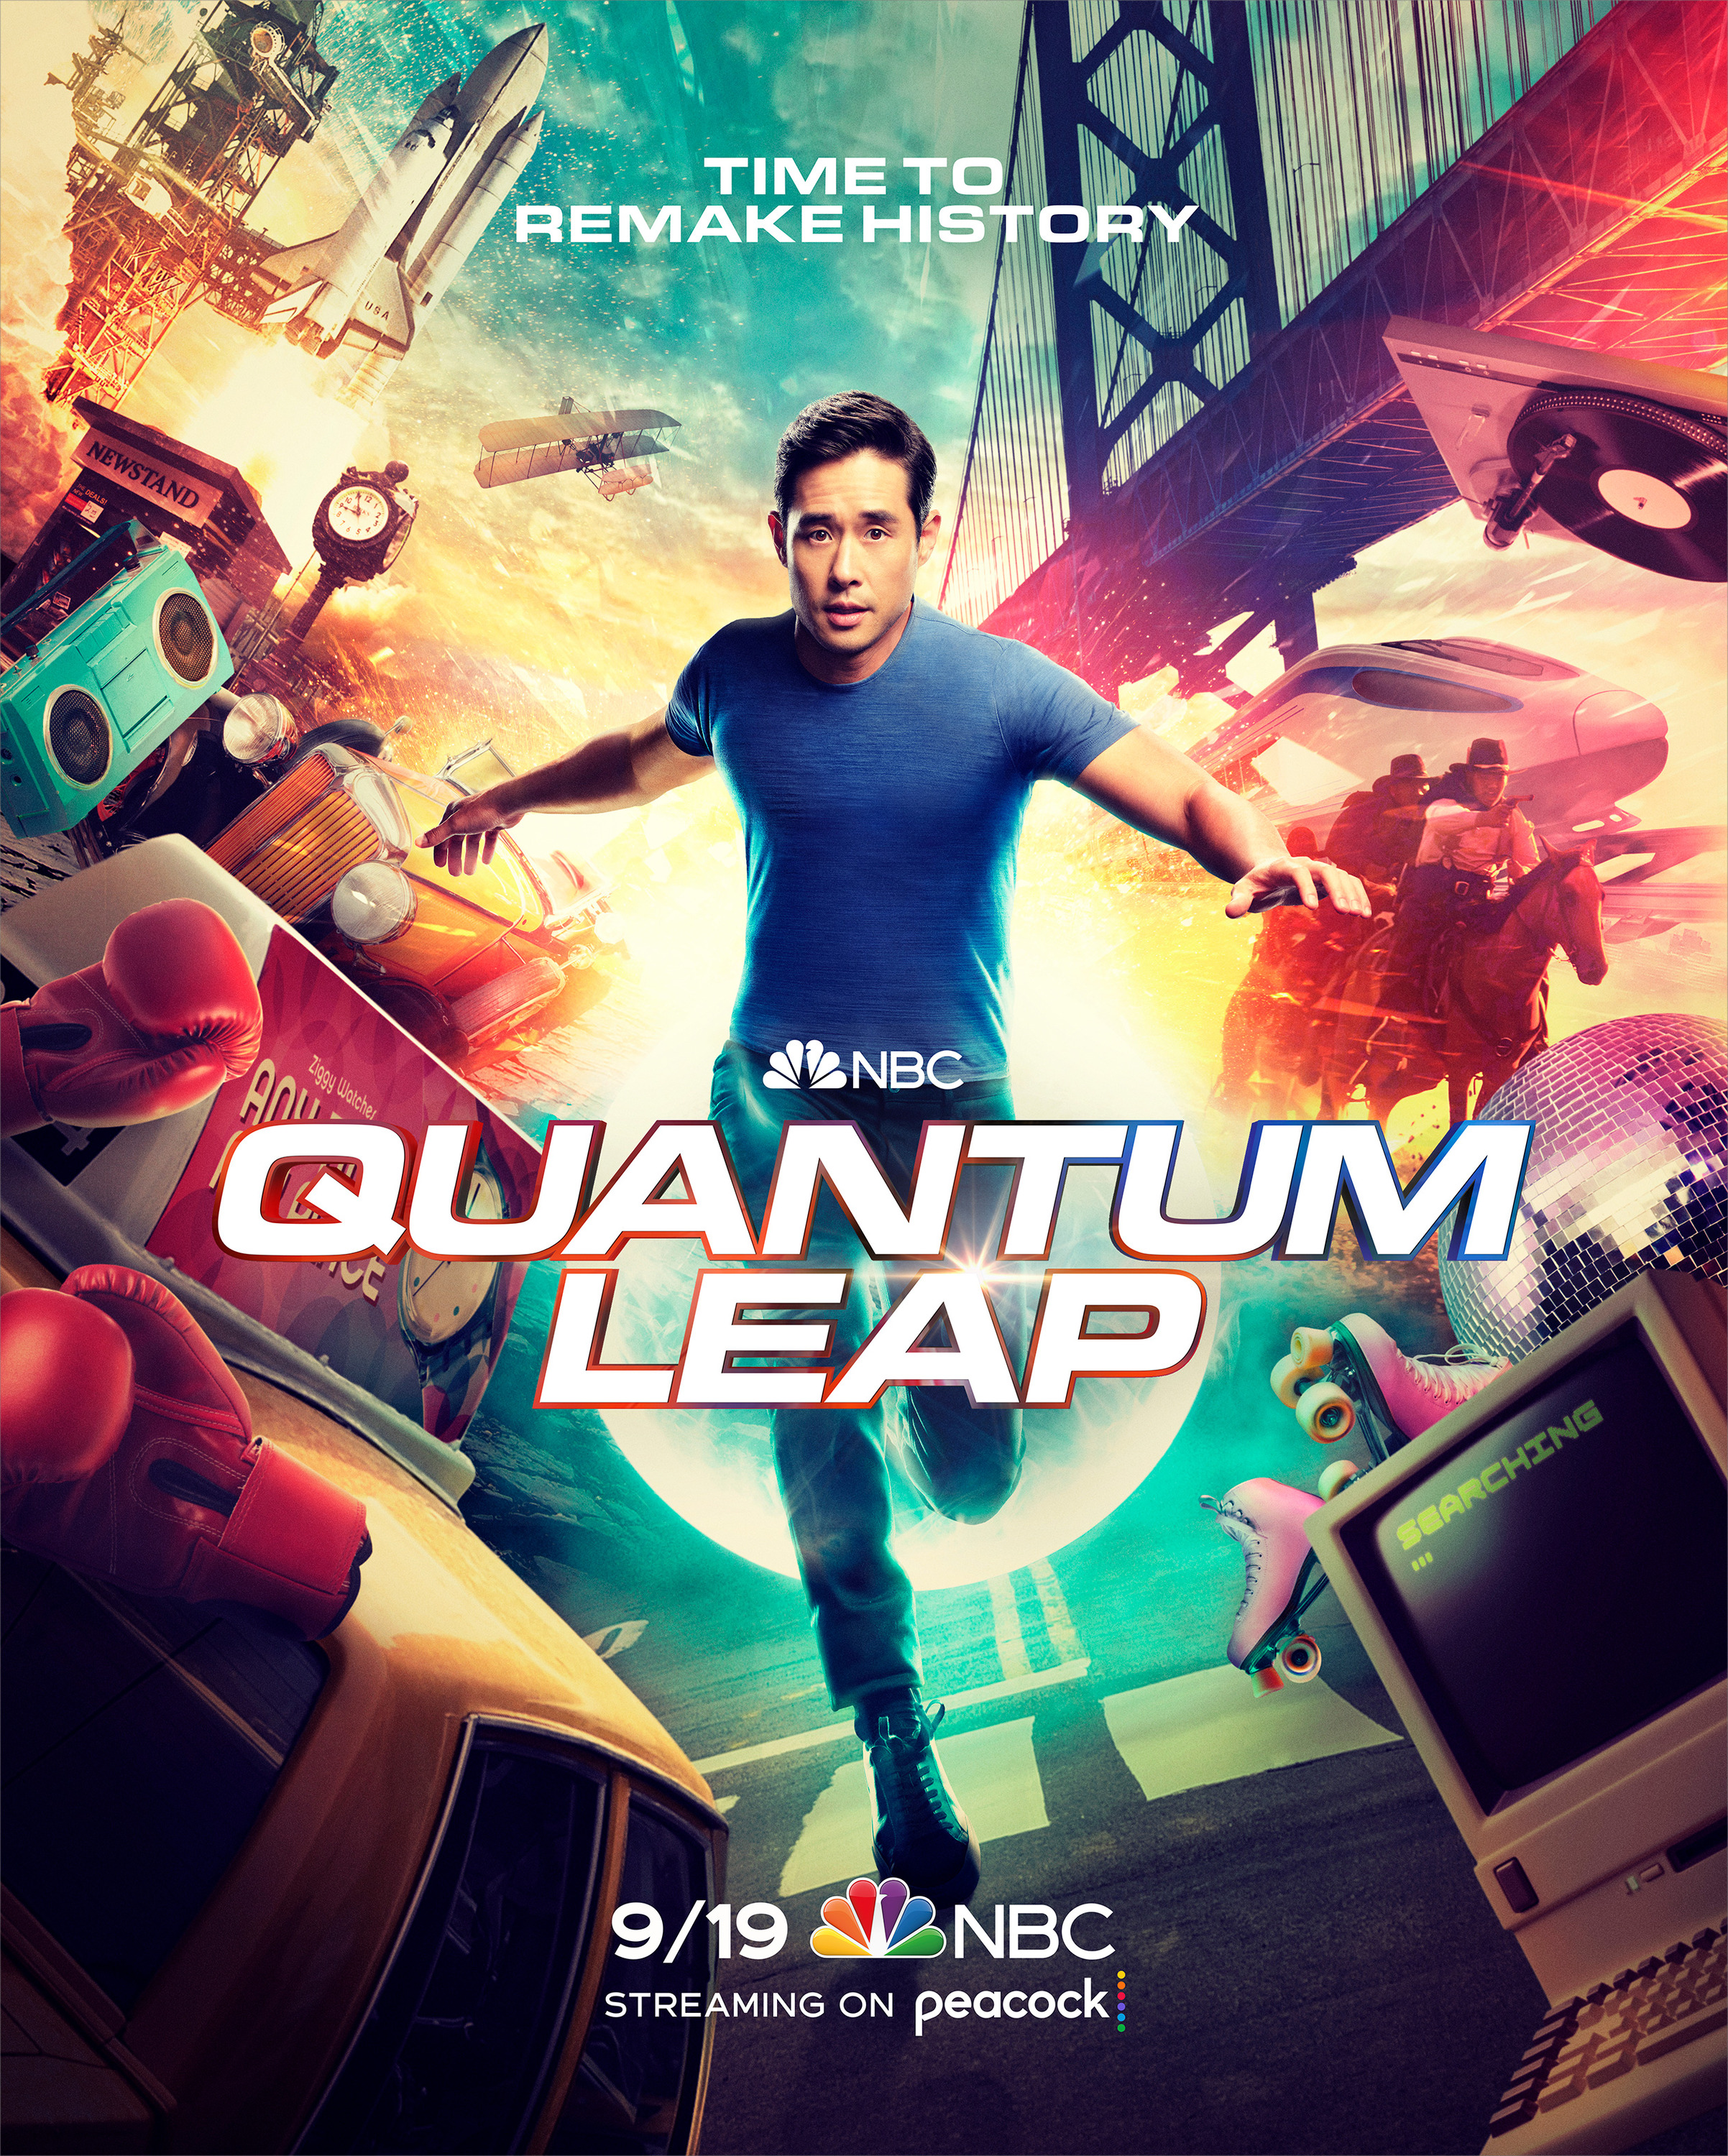 Mega Sized Movie Poster Image for Quantum Leap 